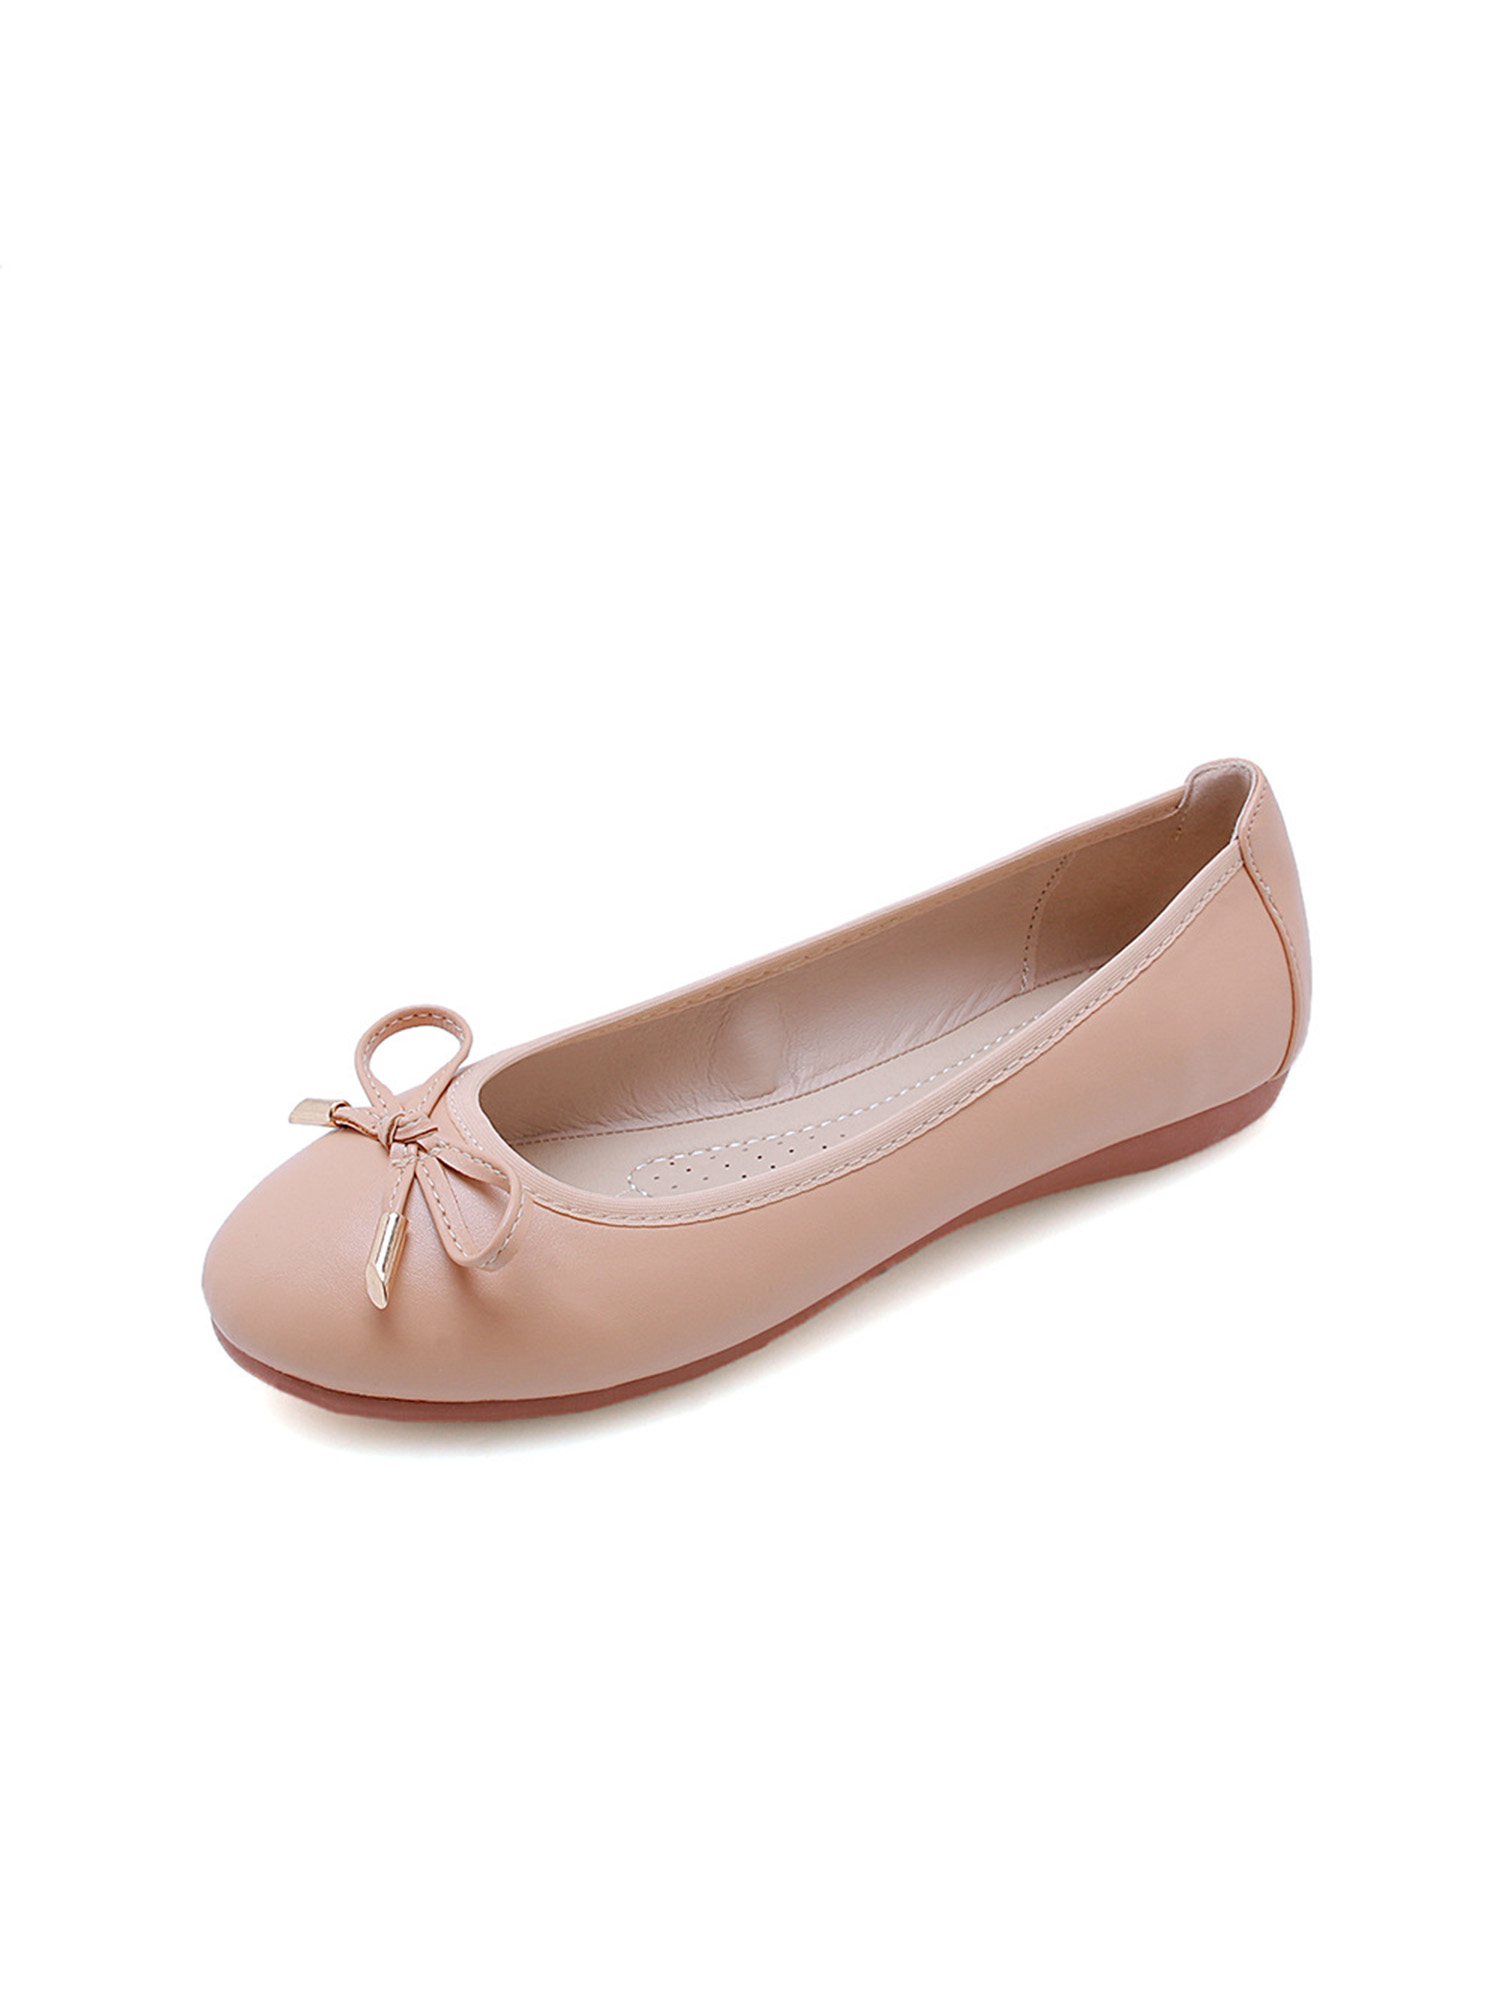 Avamo Women Flat Shoes Comfortable Slip on Round Toe Ballet Flats Casual Walking Shoes - image 1 of 3